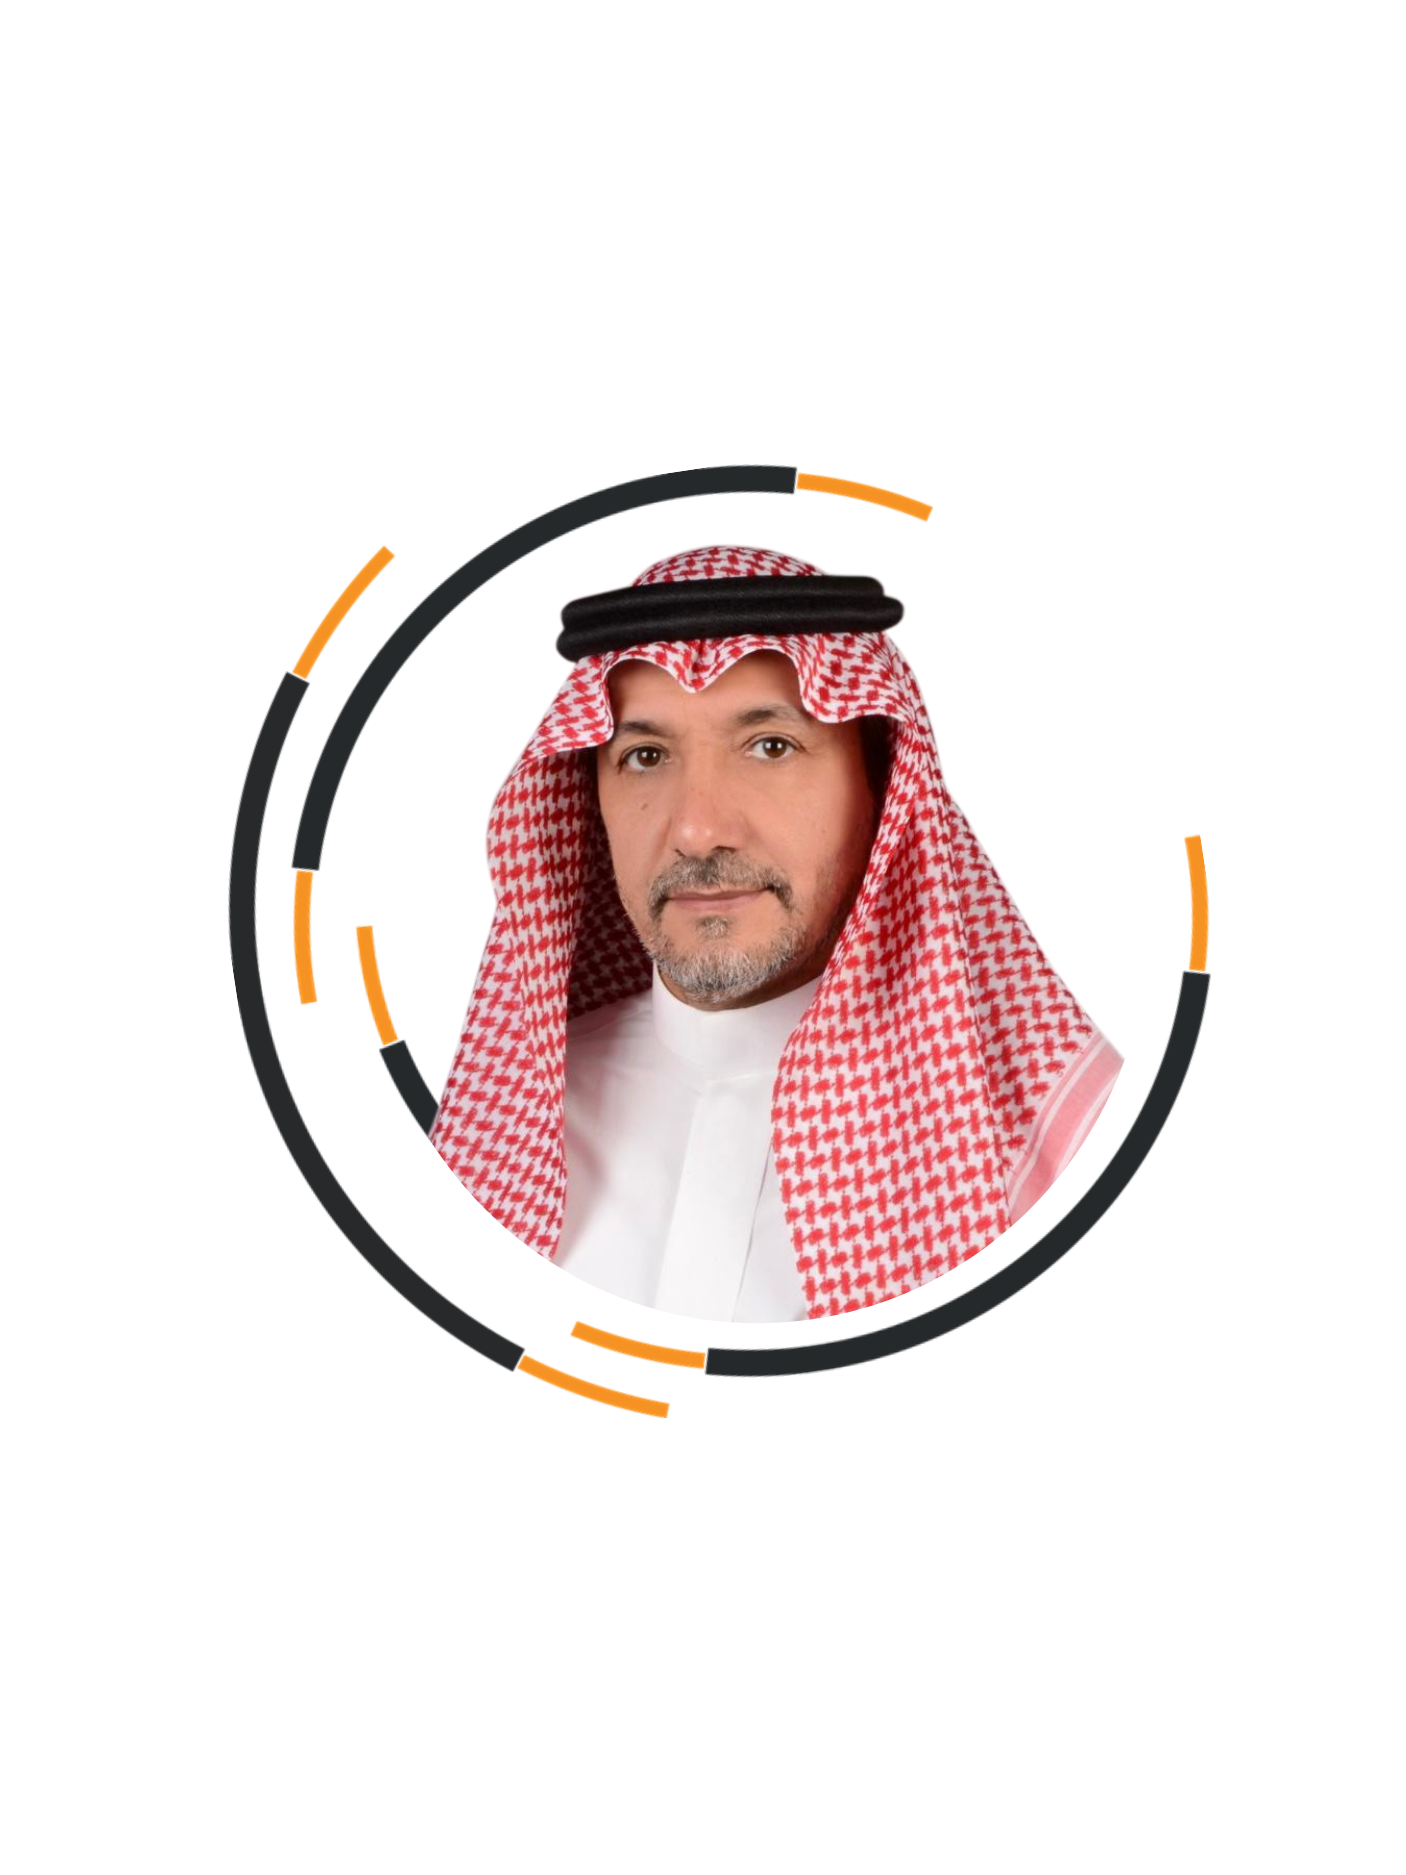 Eng. Abdullah bin Ouda Al-Ghubein